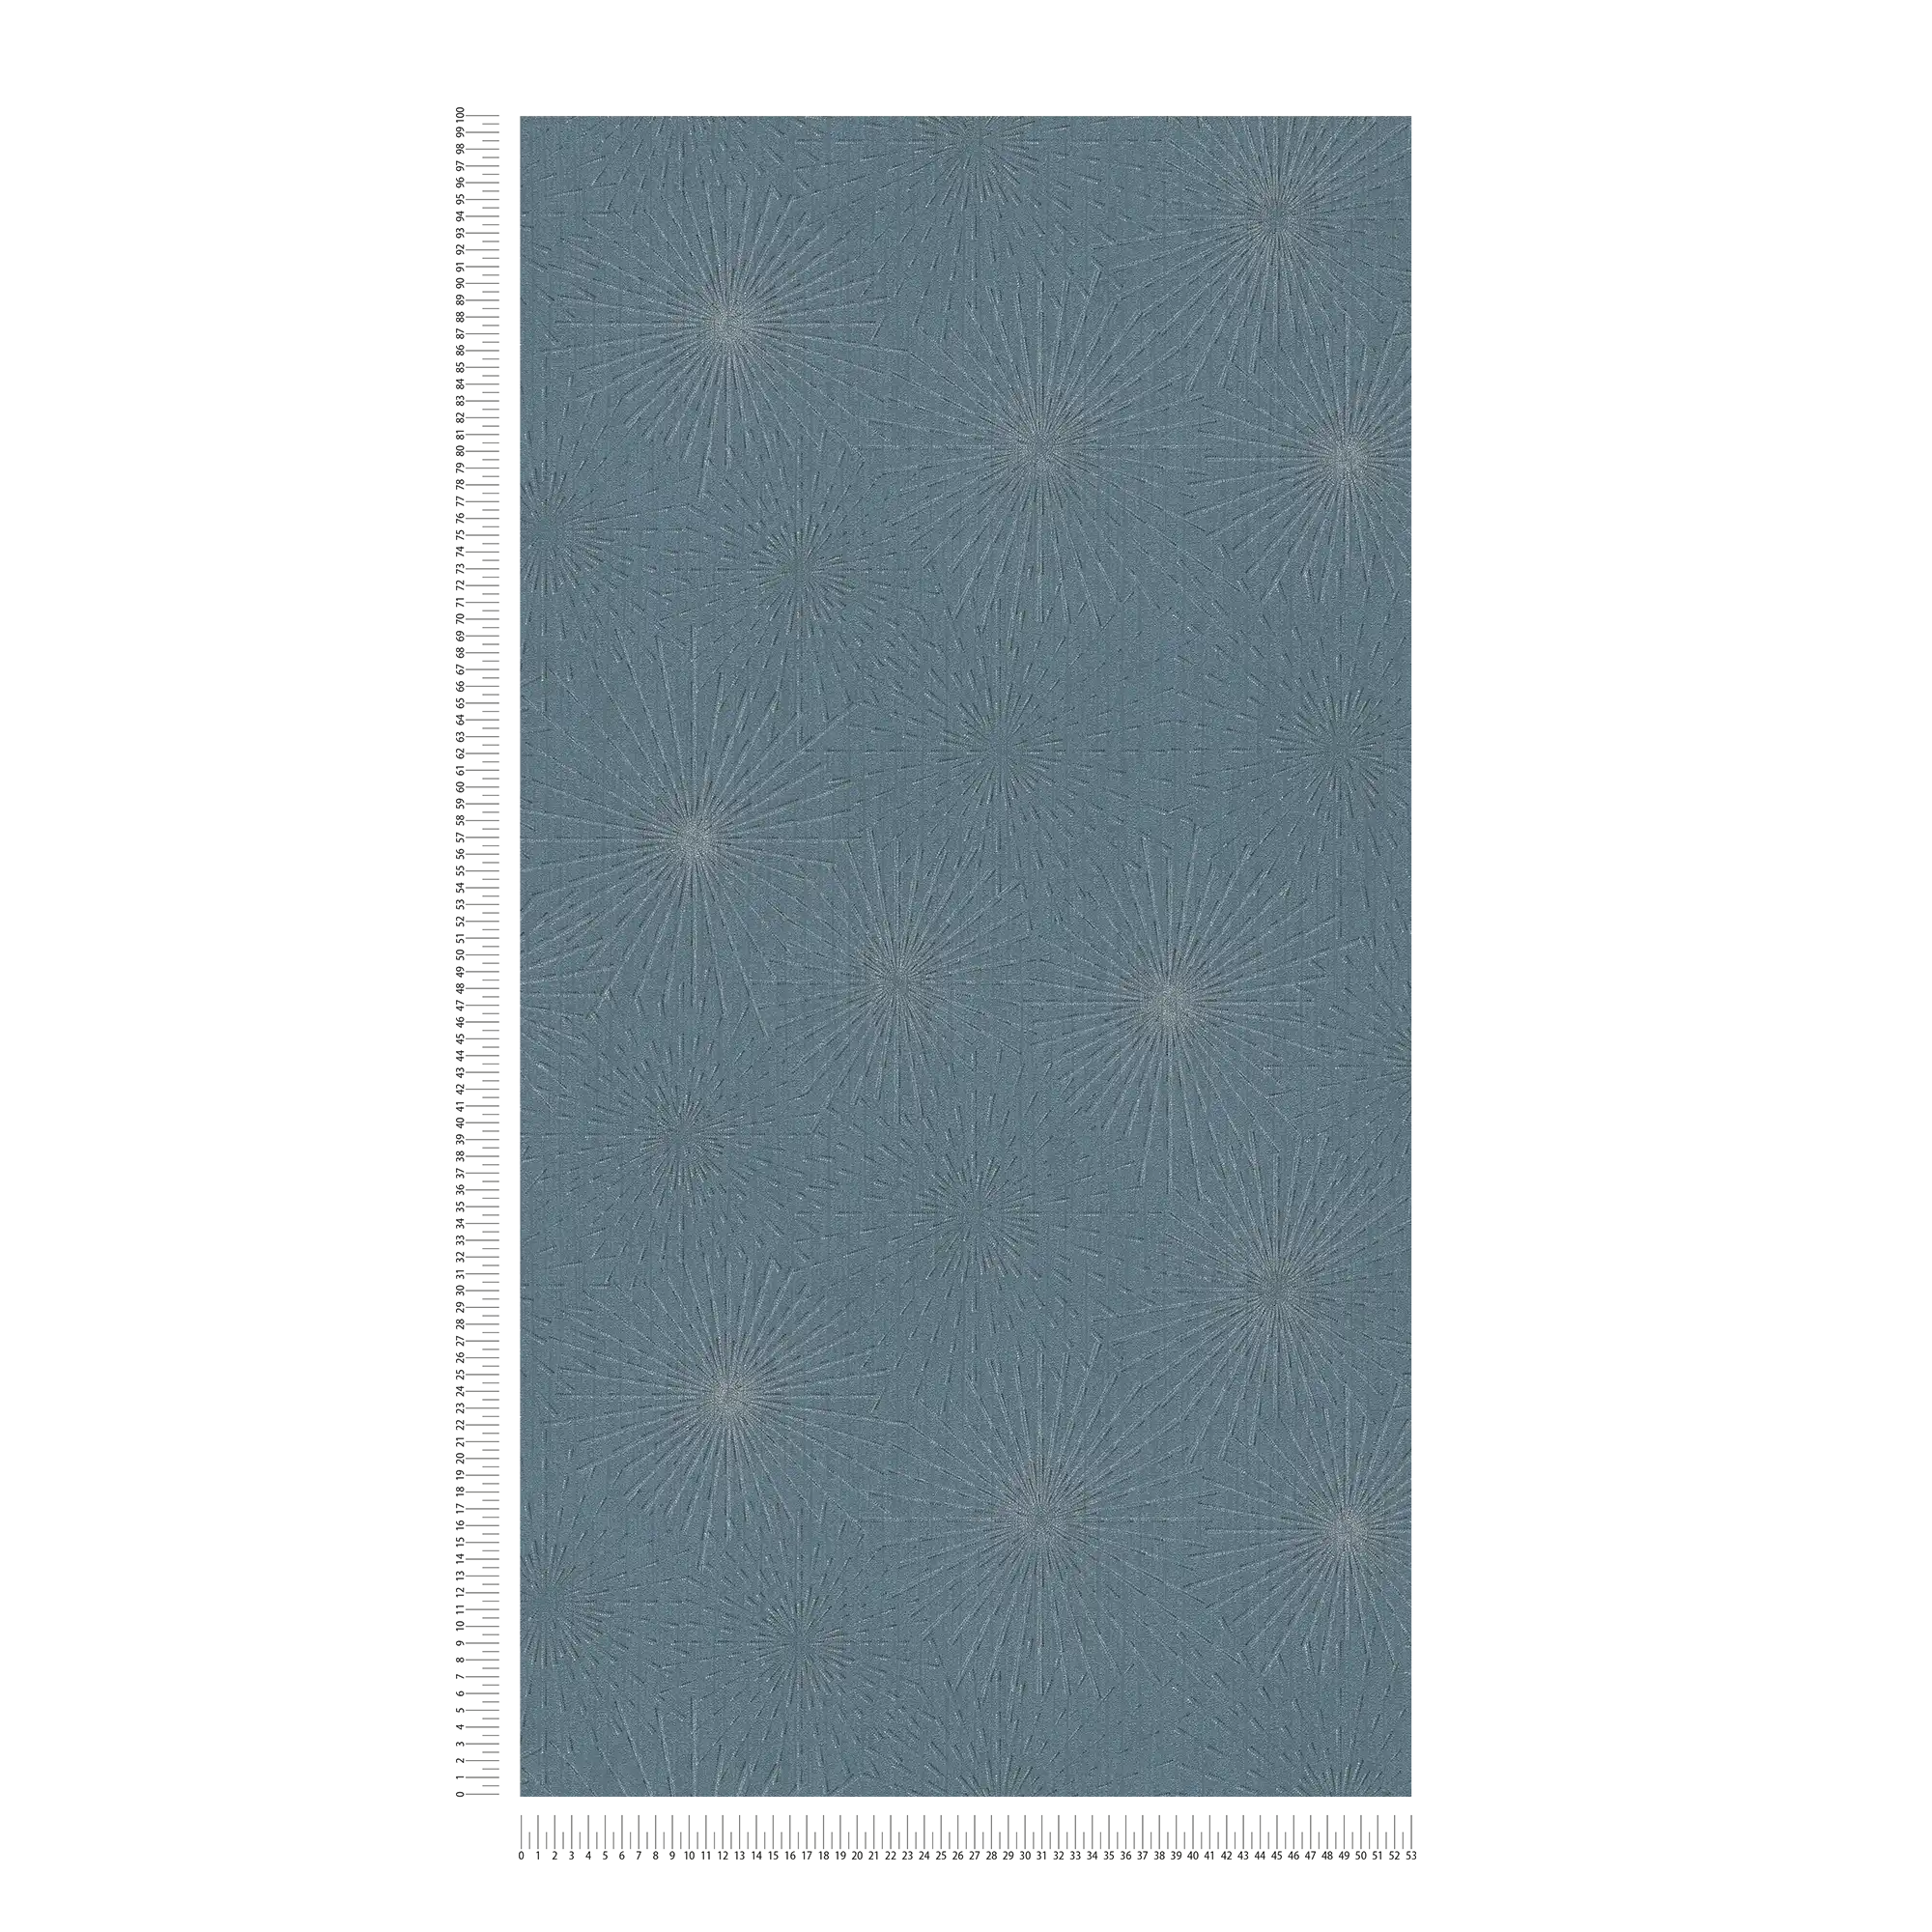             Wallpaper retro design Starburst - blue, metallic
        